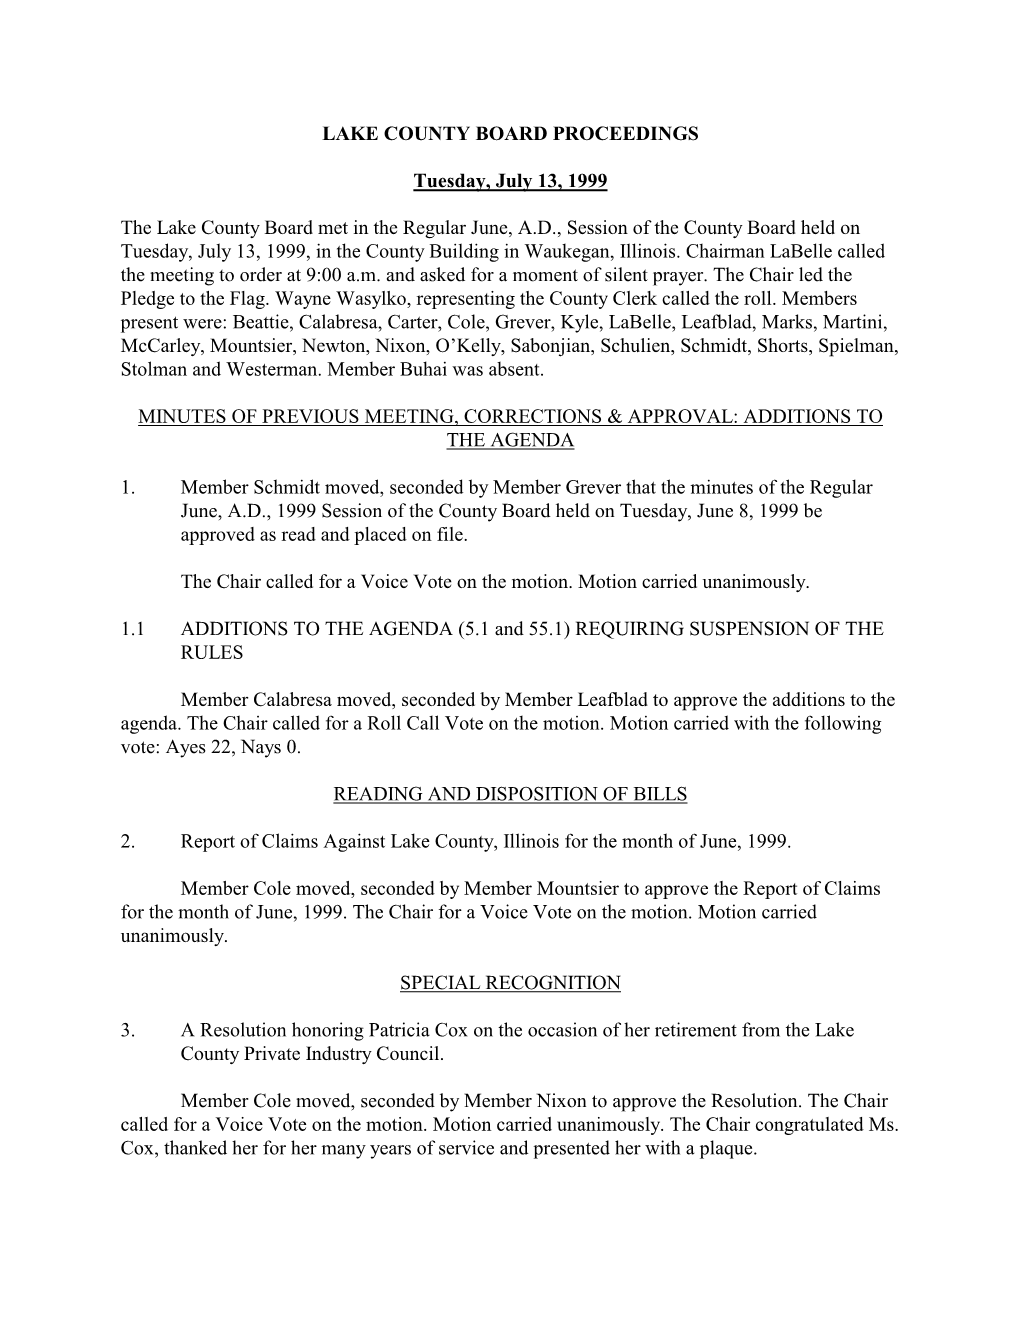 Lake County Board Proceedings Tuesday, July 13, 1999